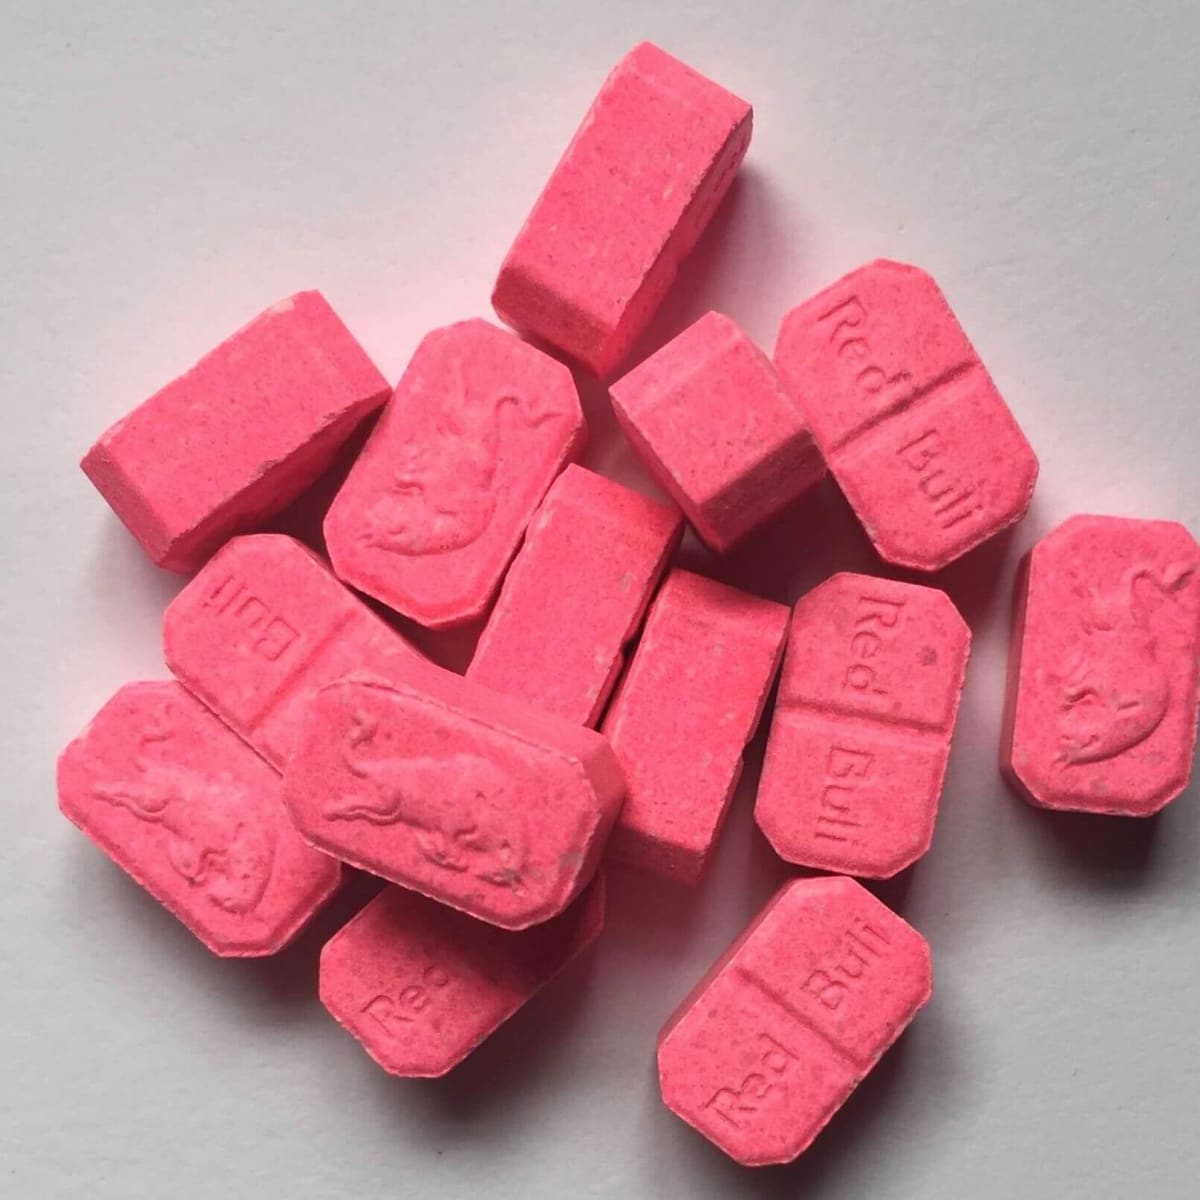 Red Bull MDMA Pills